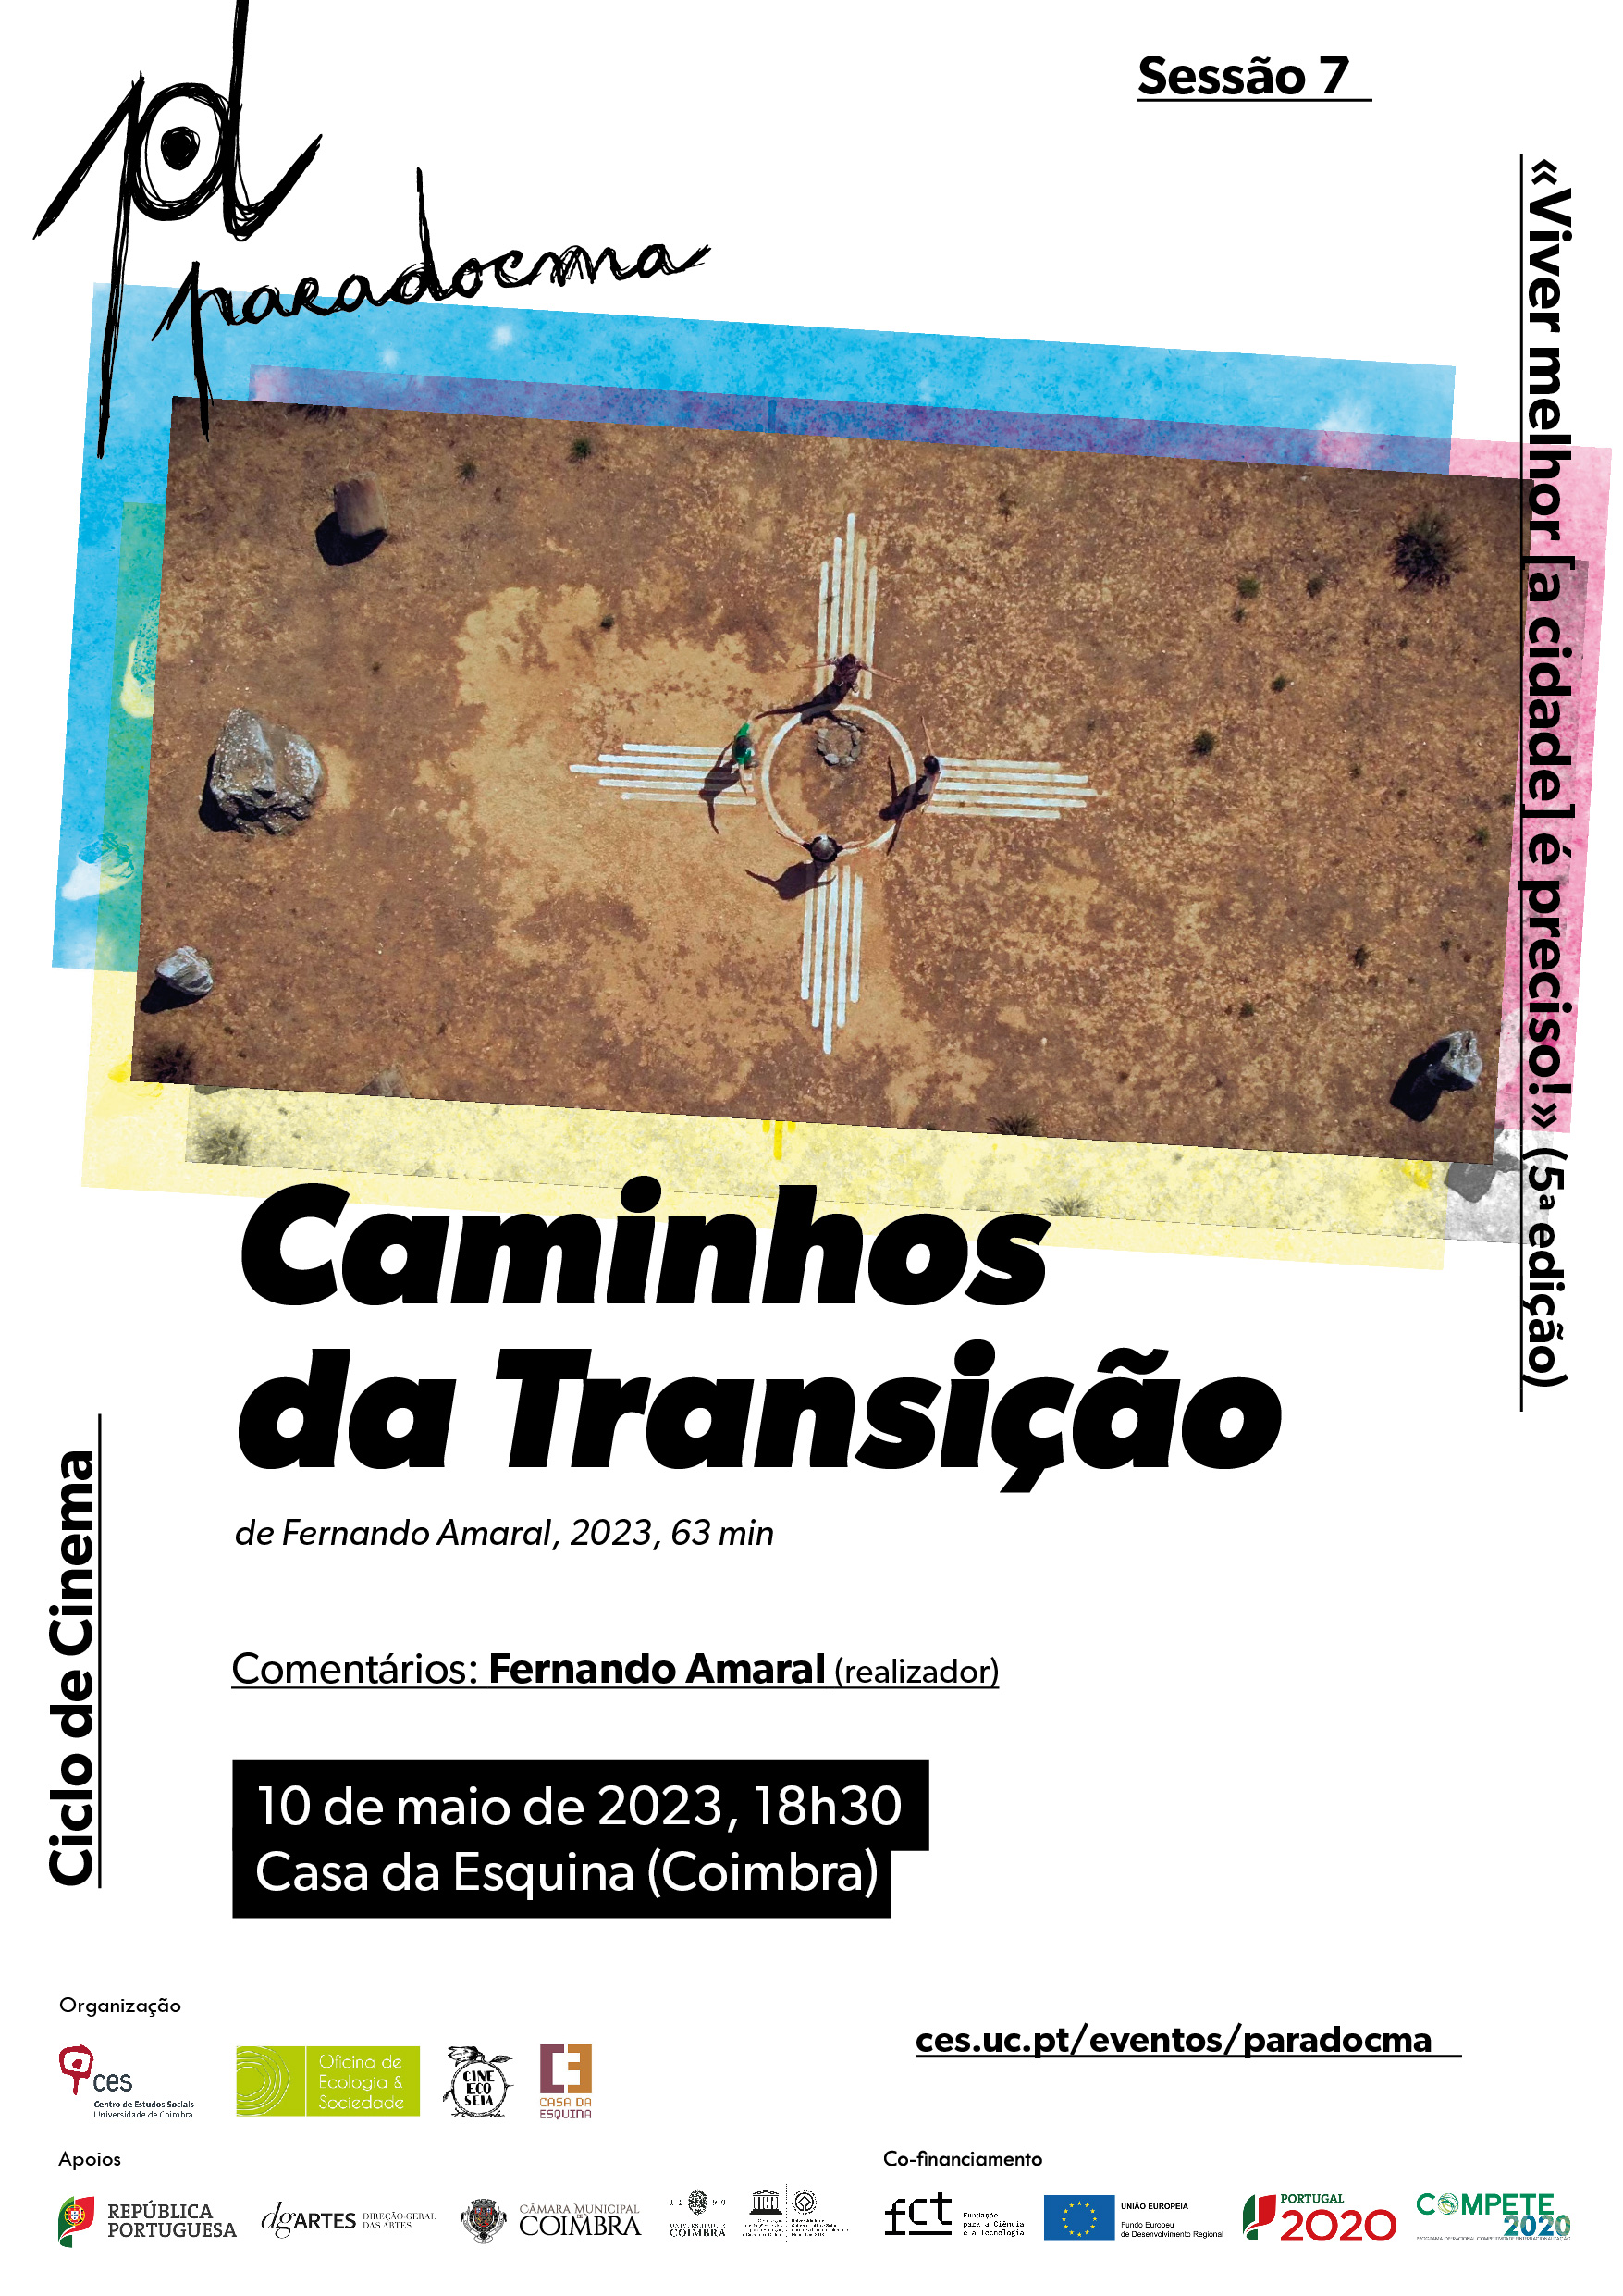 ParaDocma | Session 7: «Caminhos da Transição» by Fernando Amaral<span id="edit_45630"><script>$(function() { $('#edit_45630').load( "/myces/user/editobj.php?tipo=evento&id=45630" ); });</script></span>